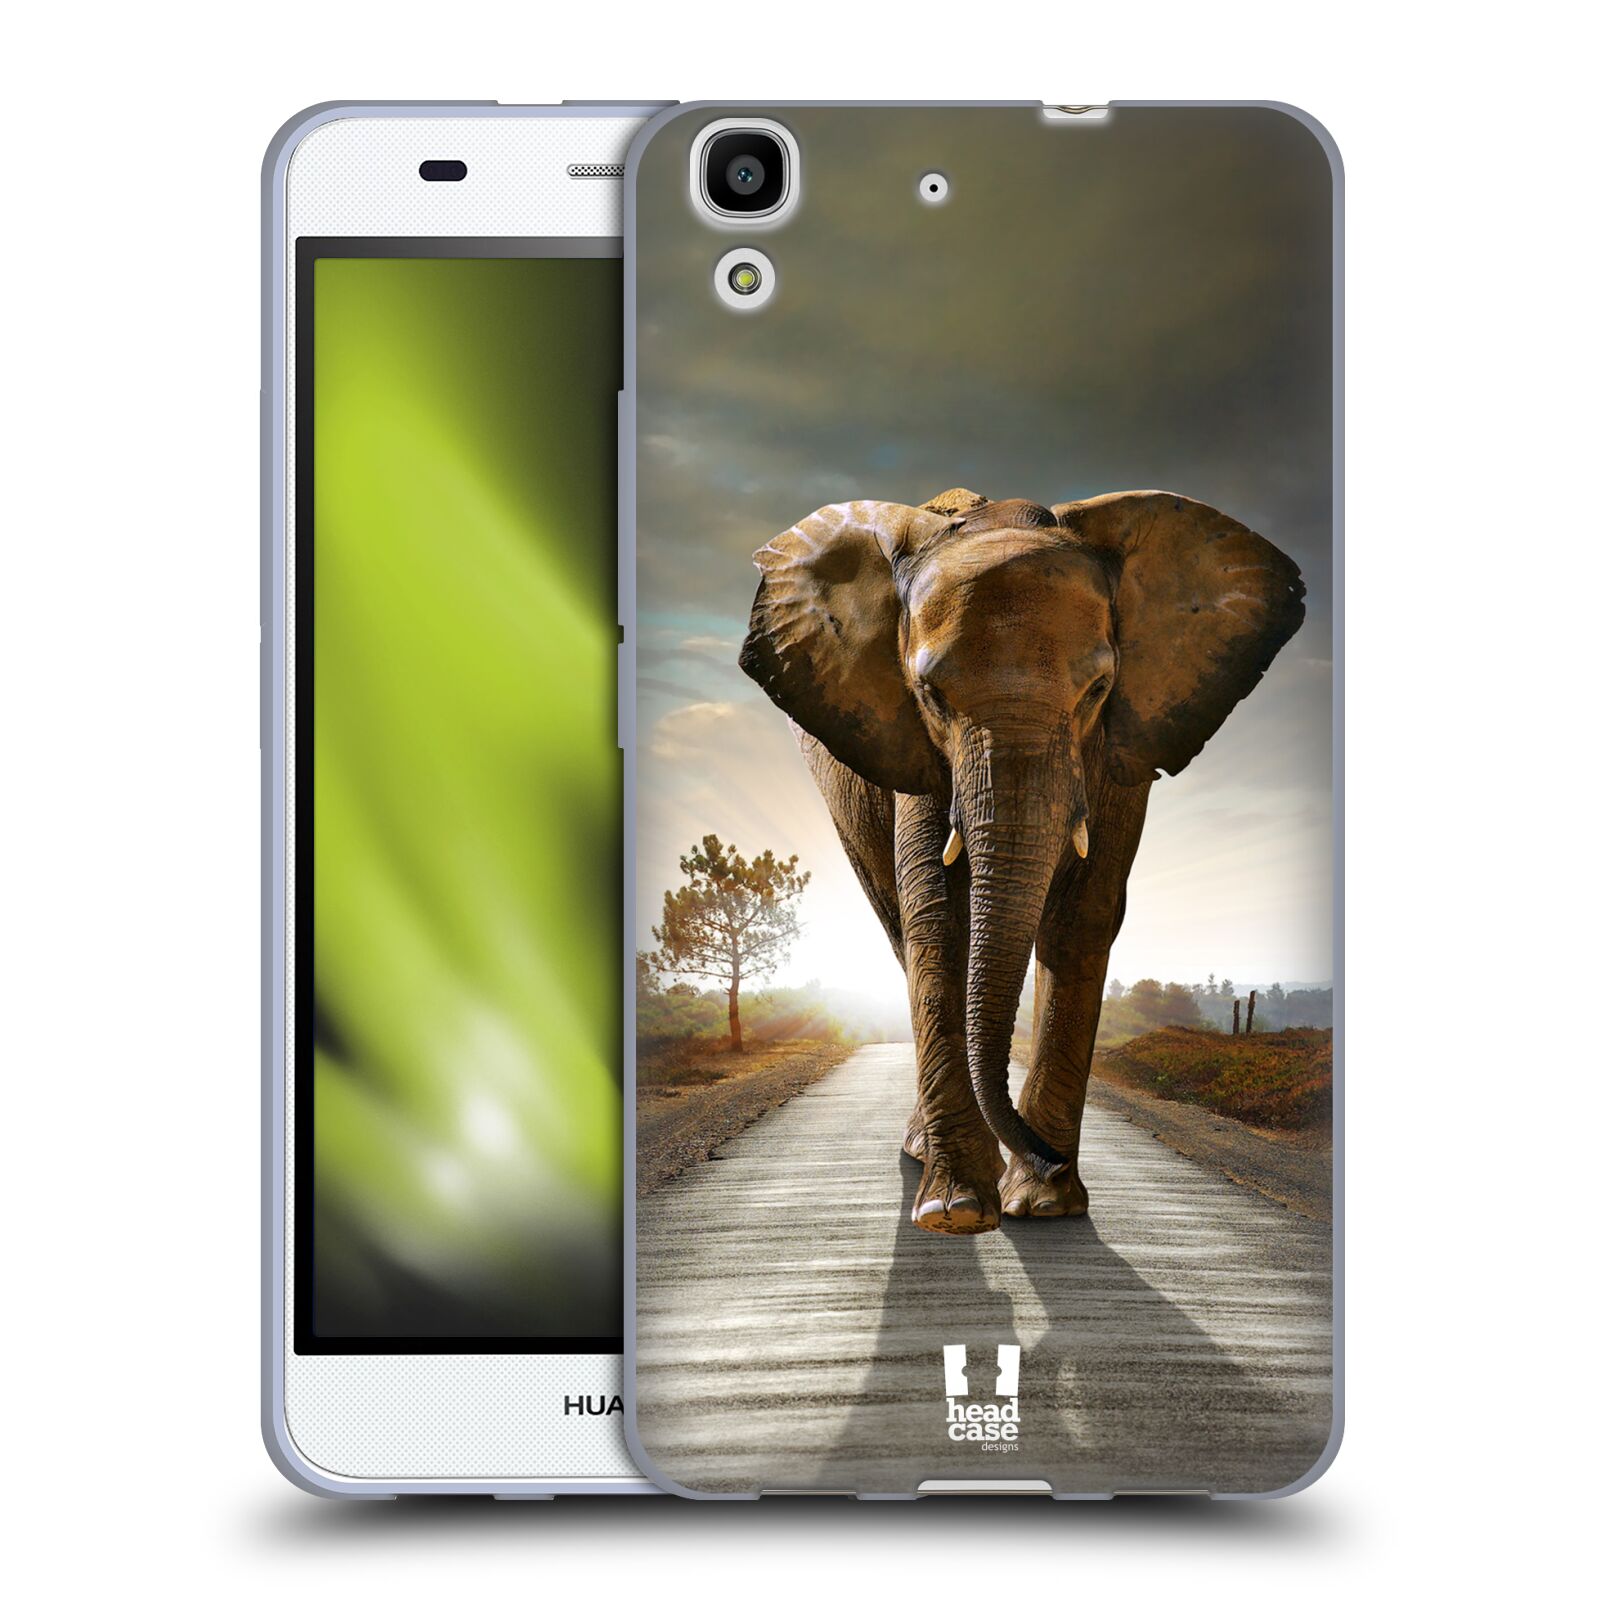 HEAD CASE silikonový obal na mobil HUAWEI Y6 vzor Divočina, Divoký život a zvířata foto AFRIKA KRÁČEJÍCI SLON